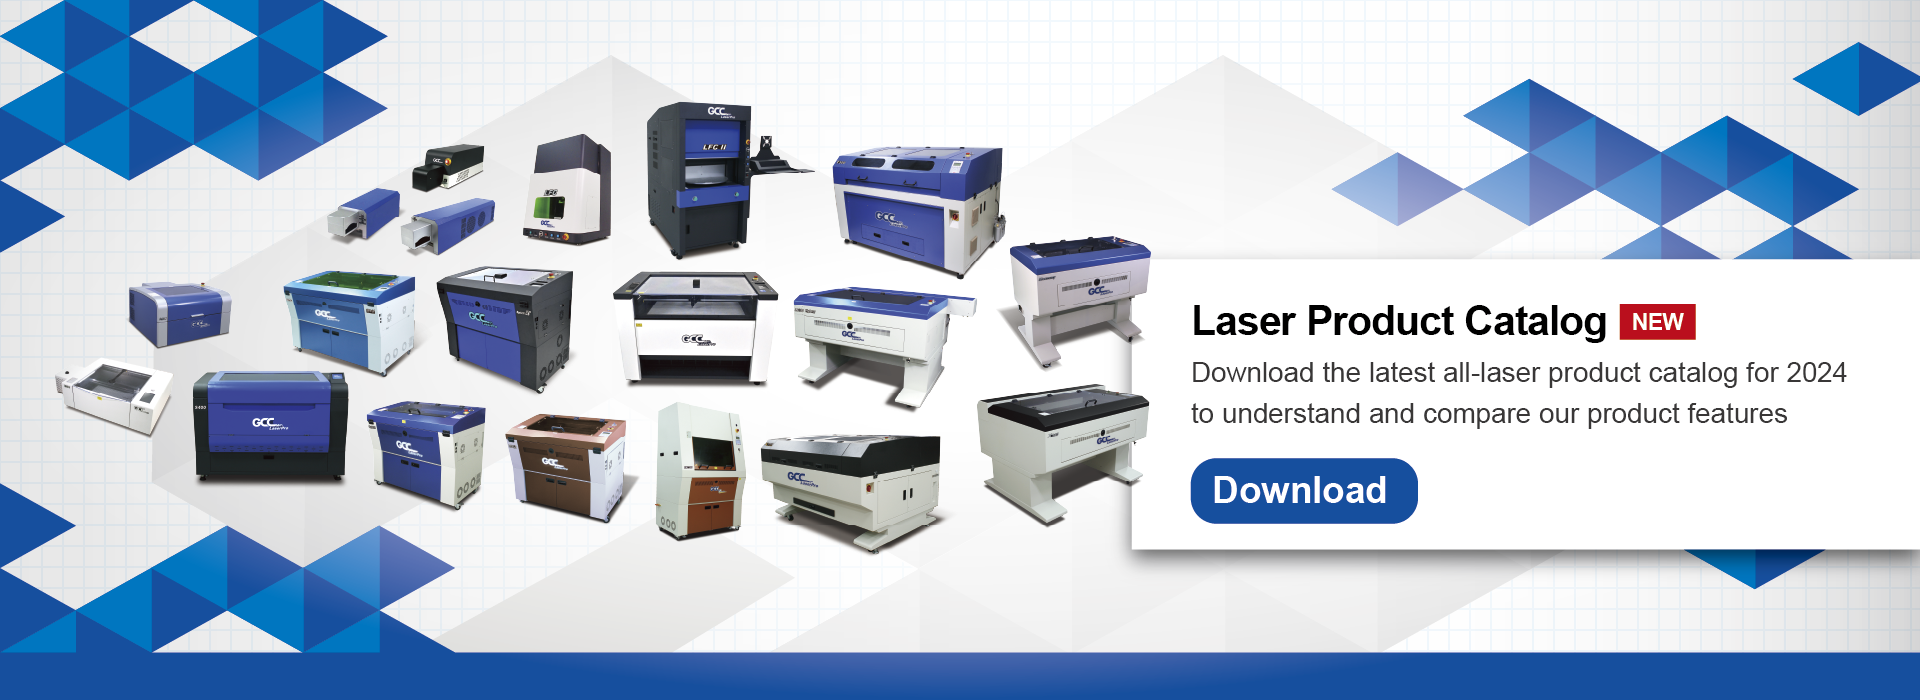 Laser Product Catalog